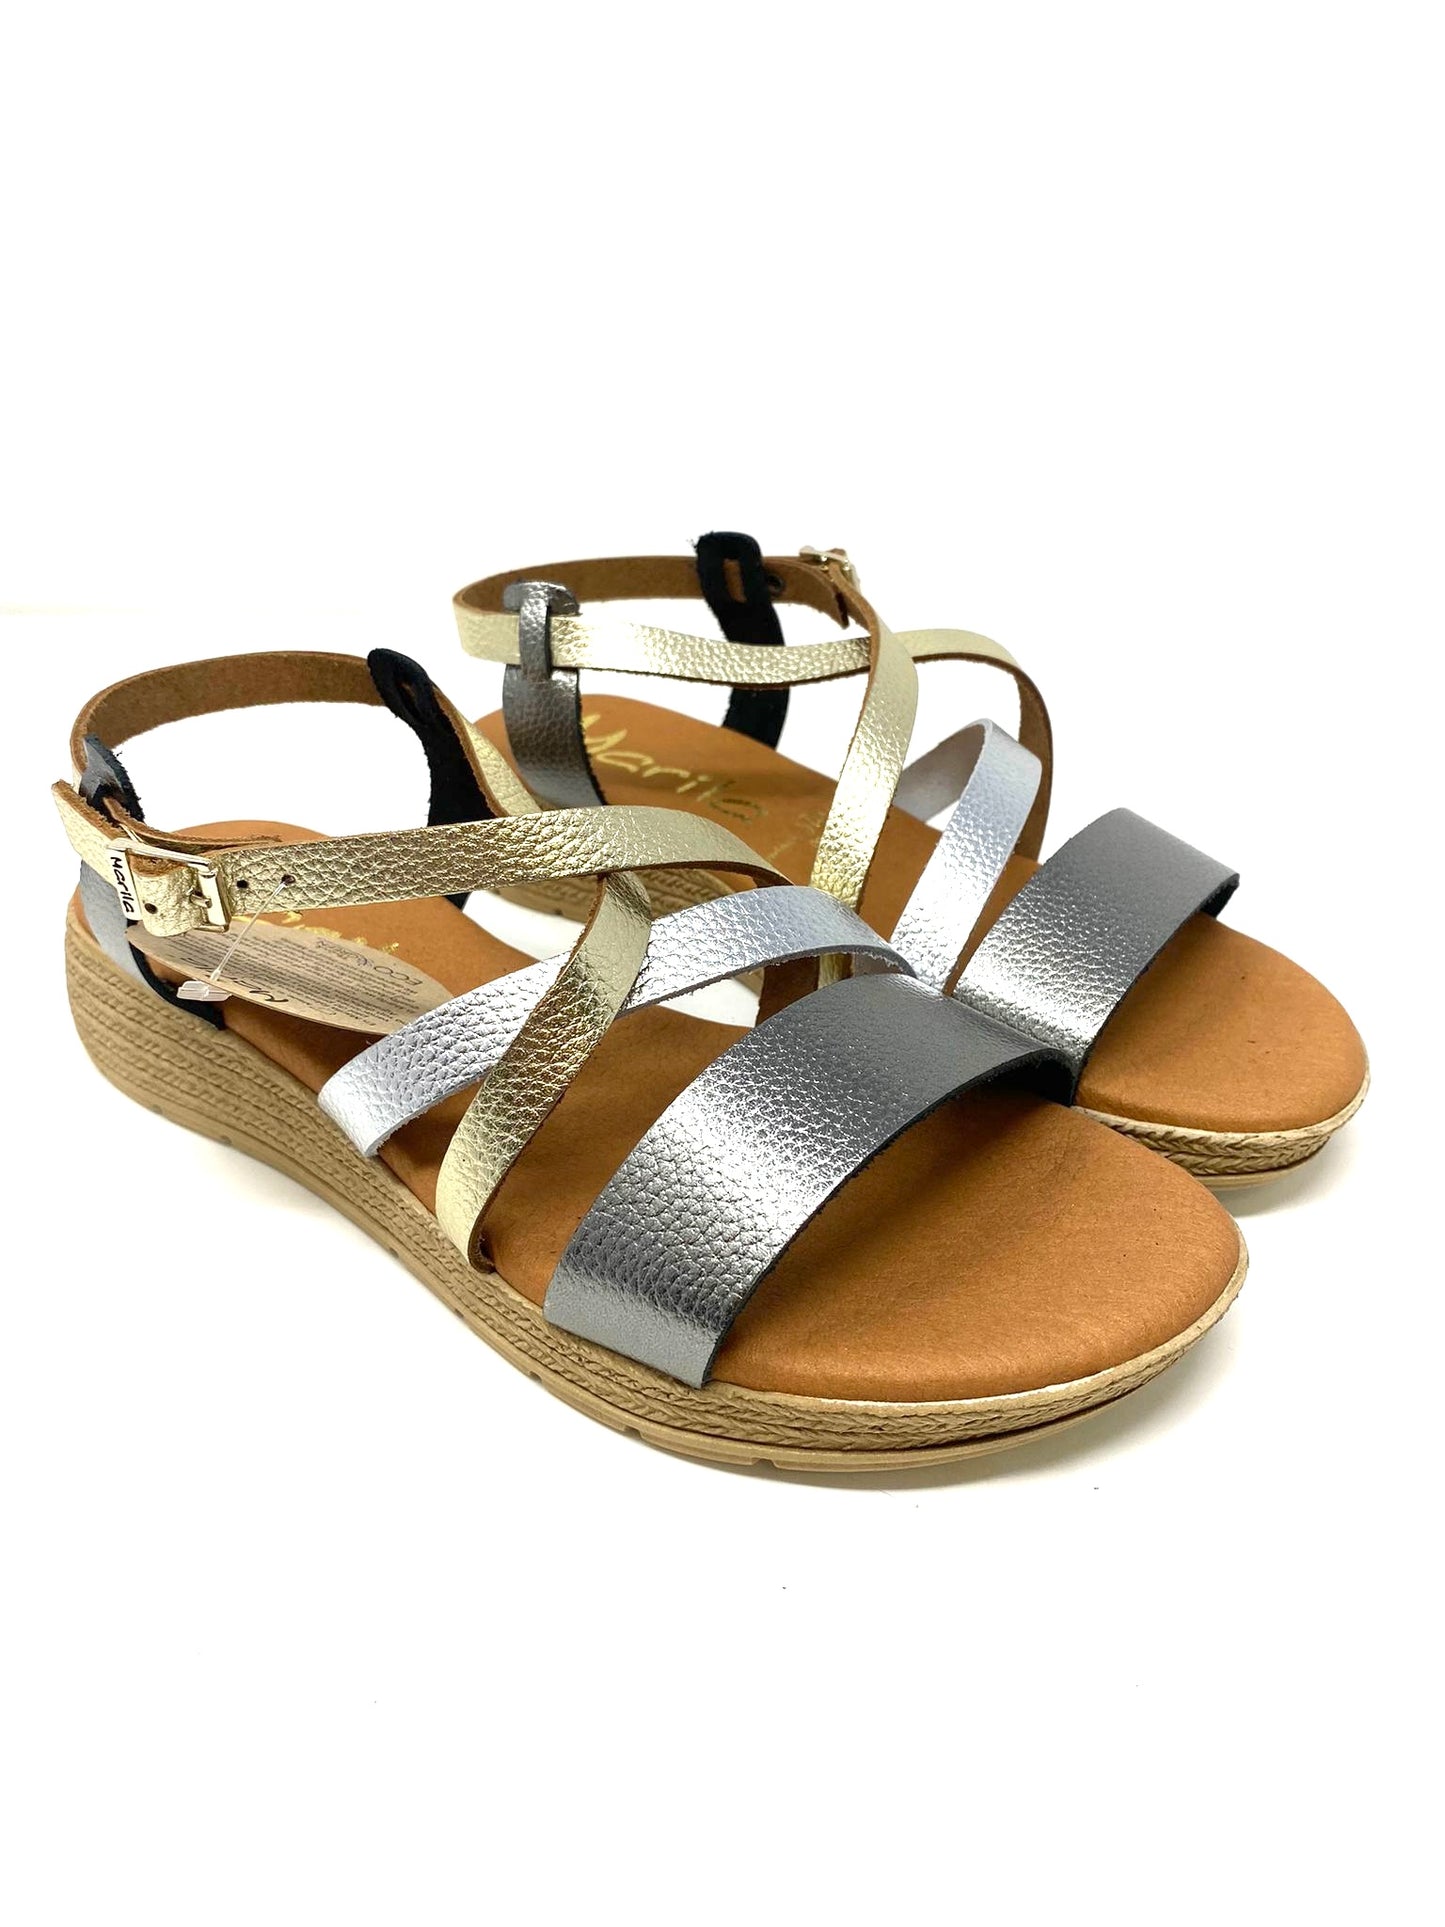 Marila Doma grain leather multi metal sandal